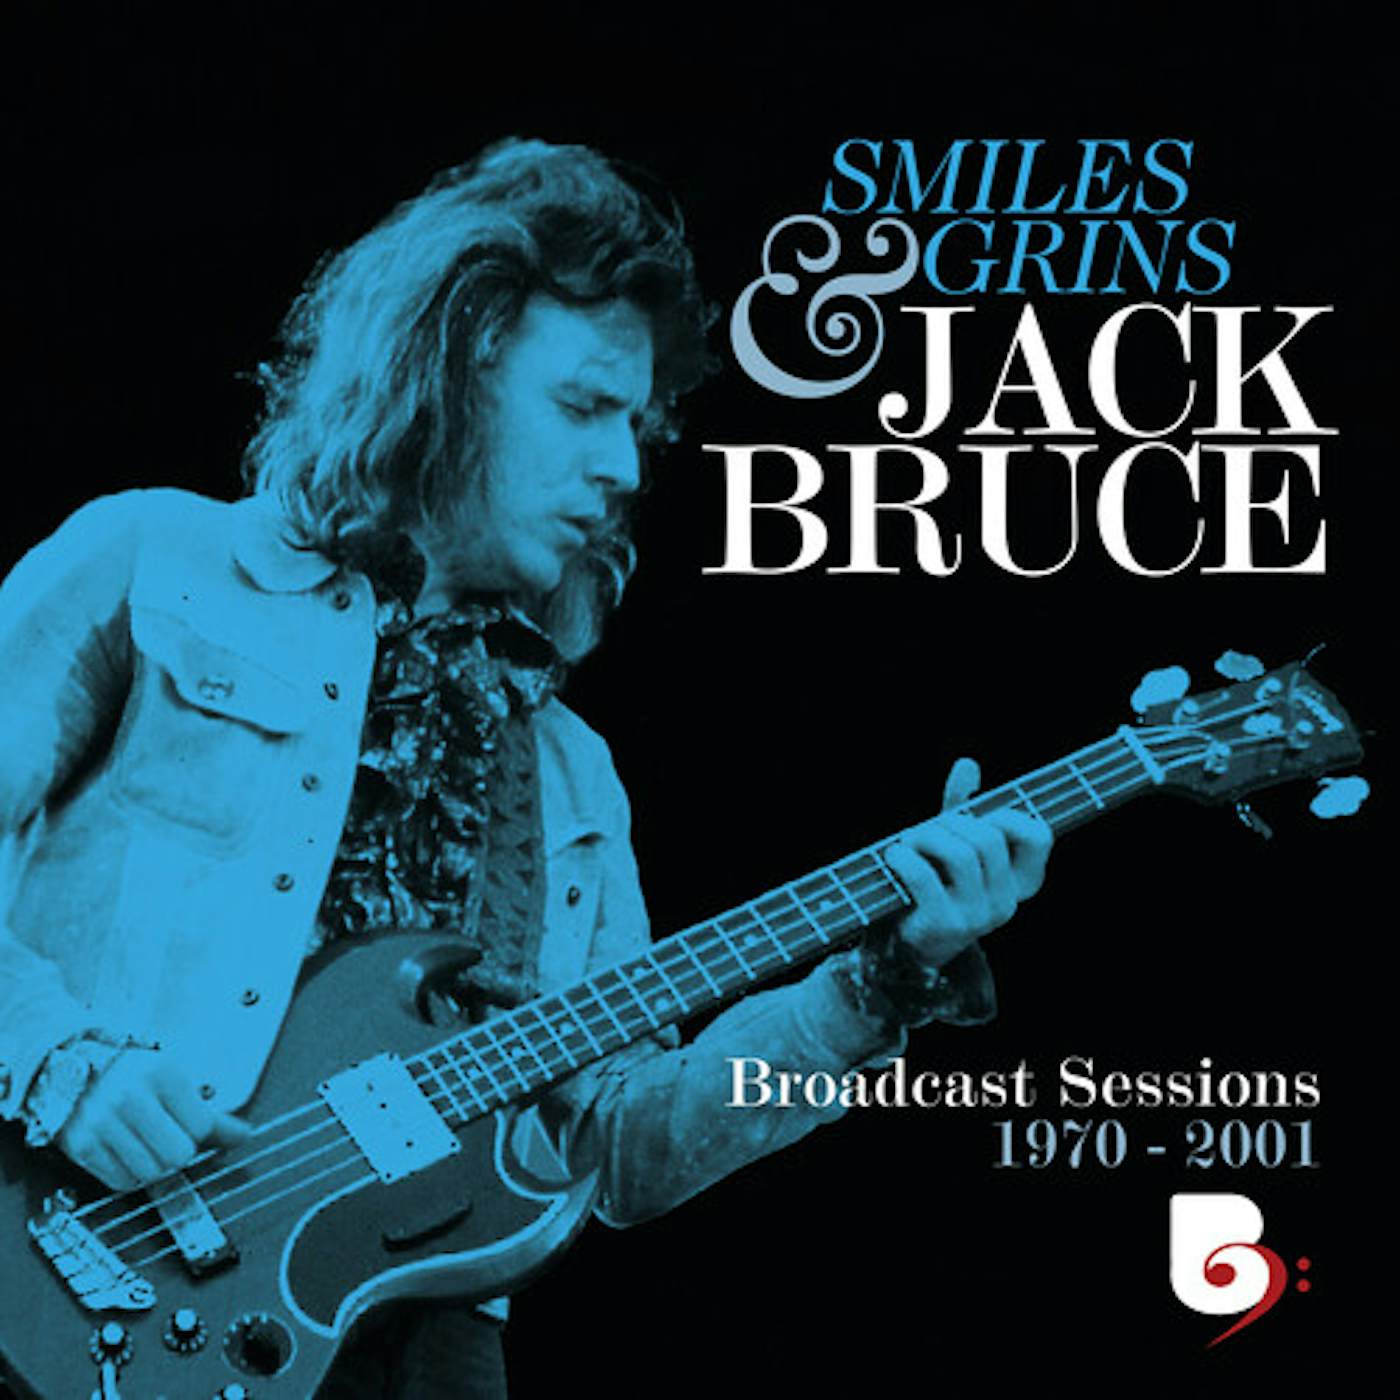 Jack Bruce SMILES & GRINS BROADCAST SESSIONS 1970-2001 CD